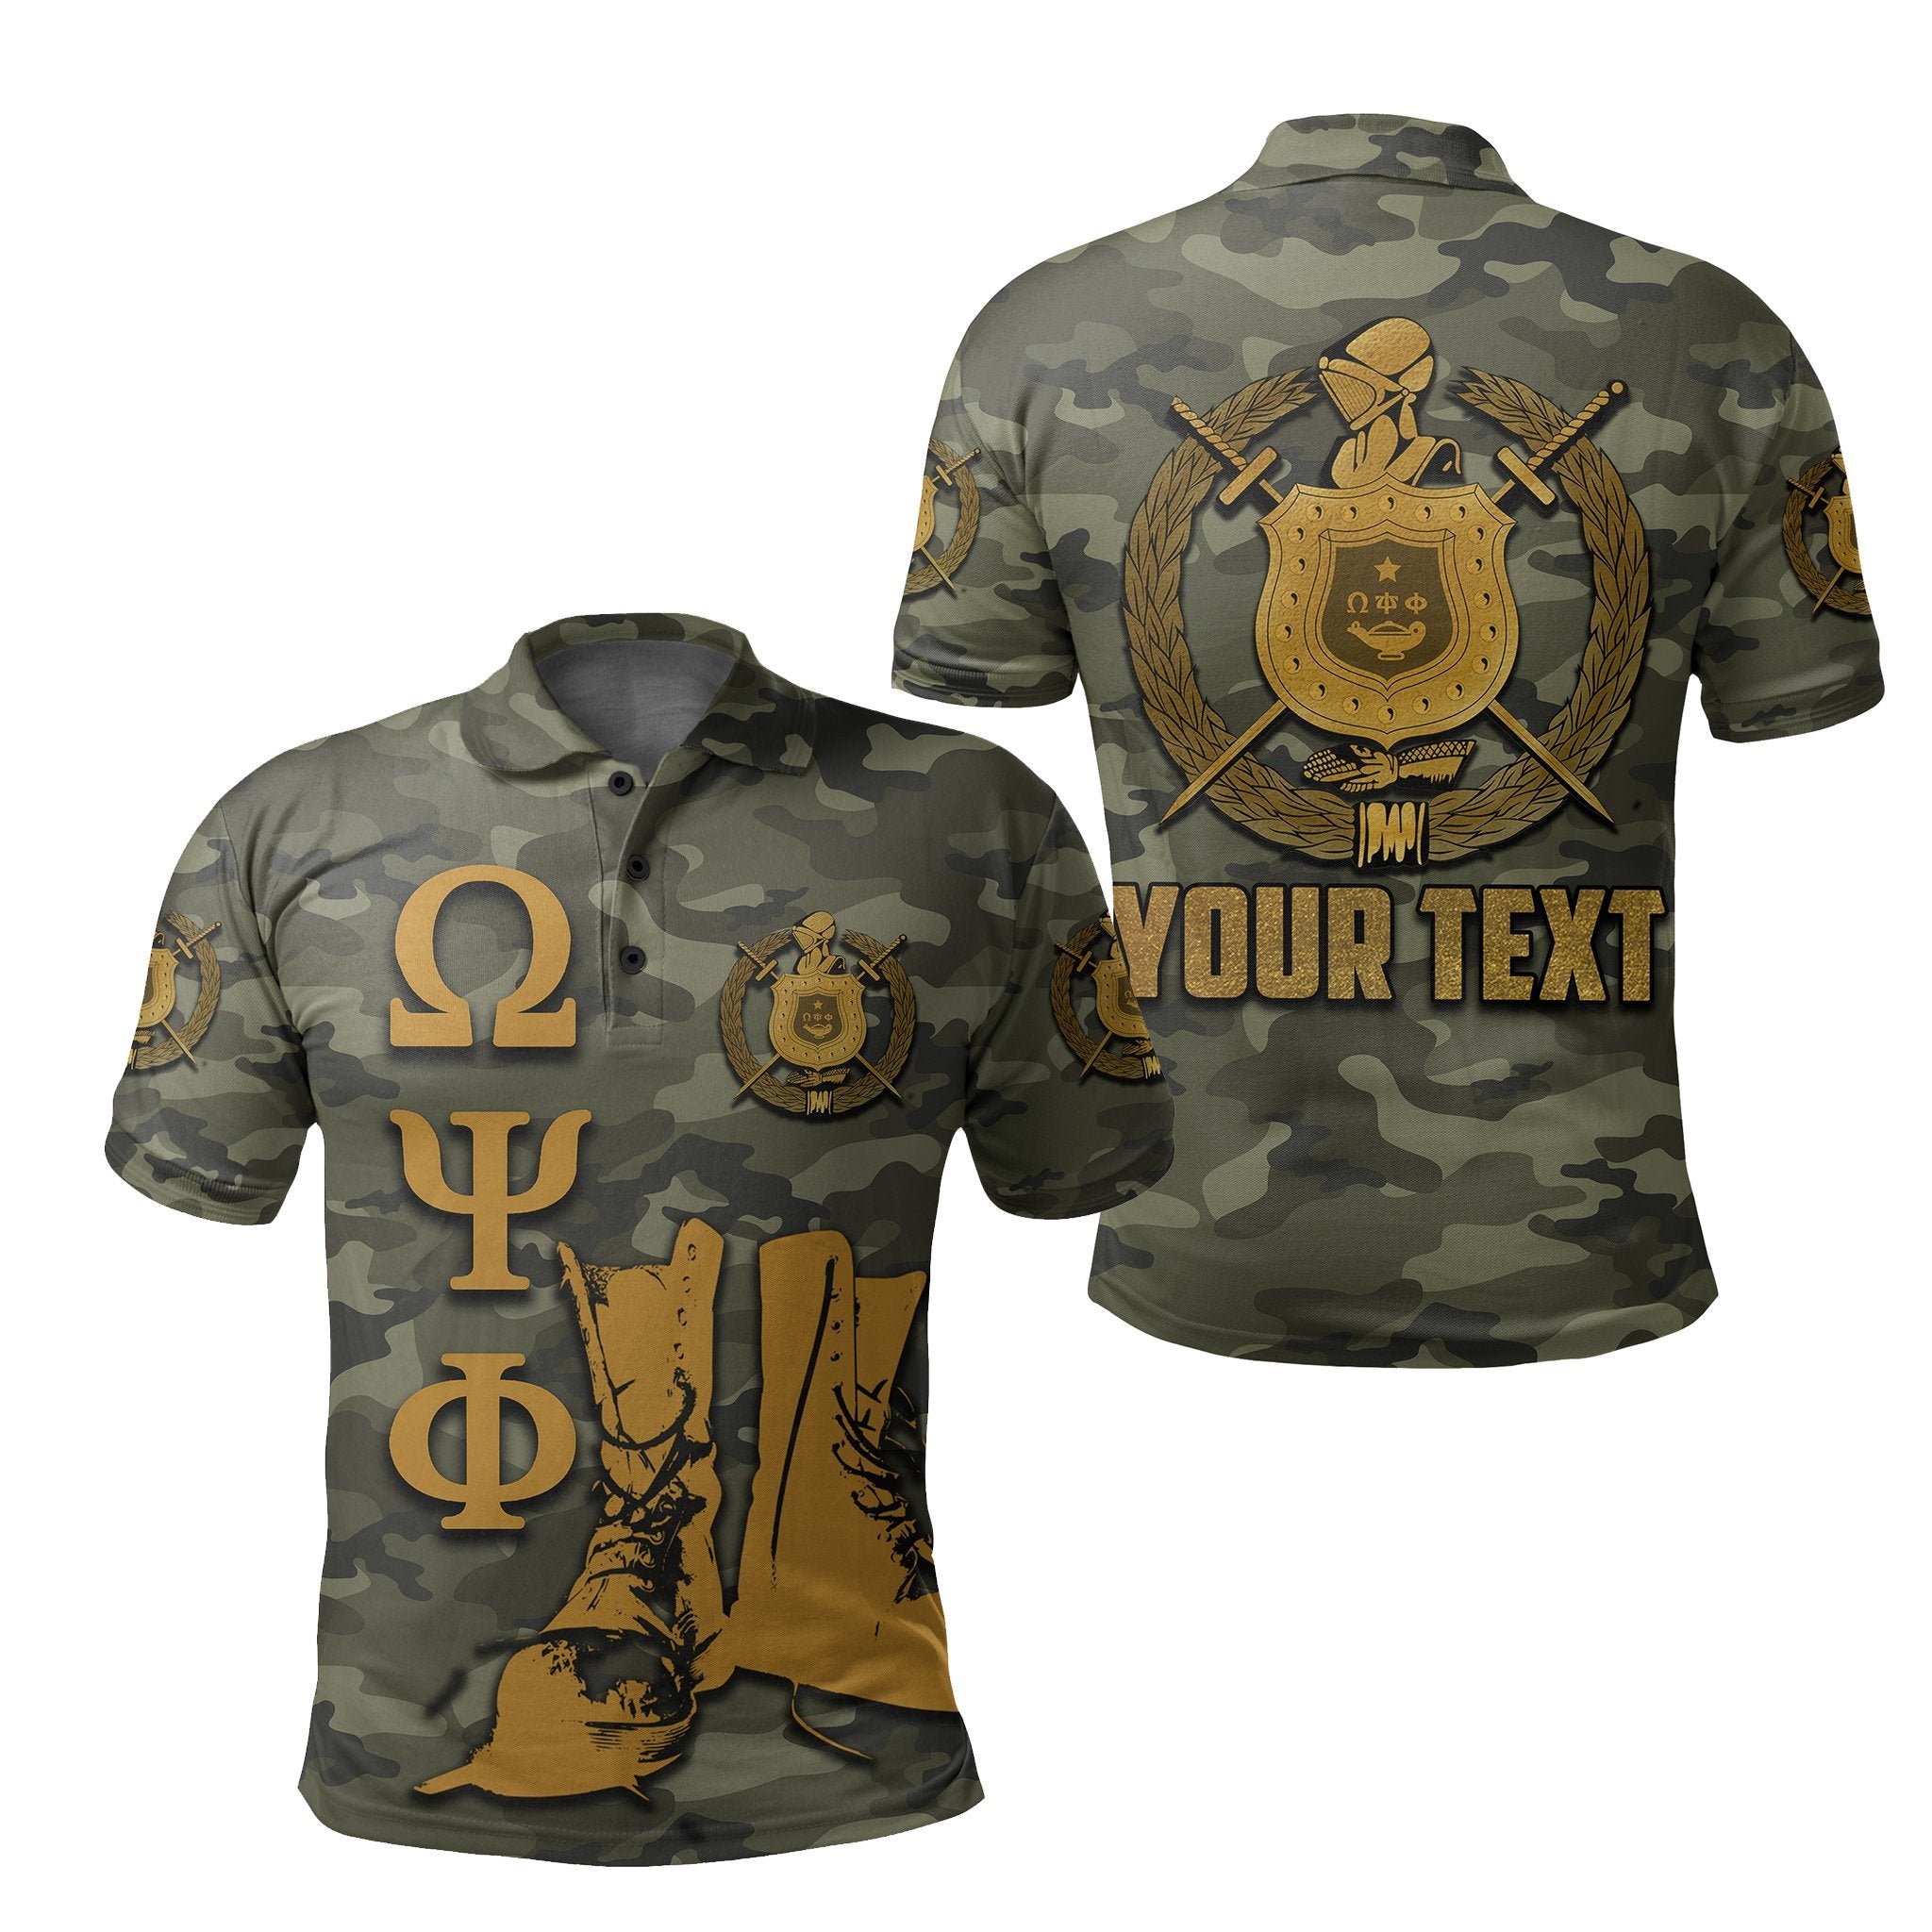 (Custom Personalised) Greek Life Polo Shirt Omega Psi Phi Army Boots 1911 Lt6